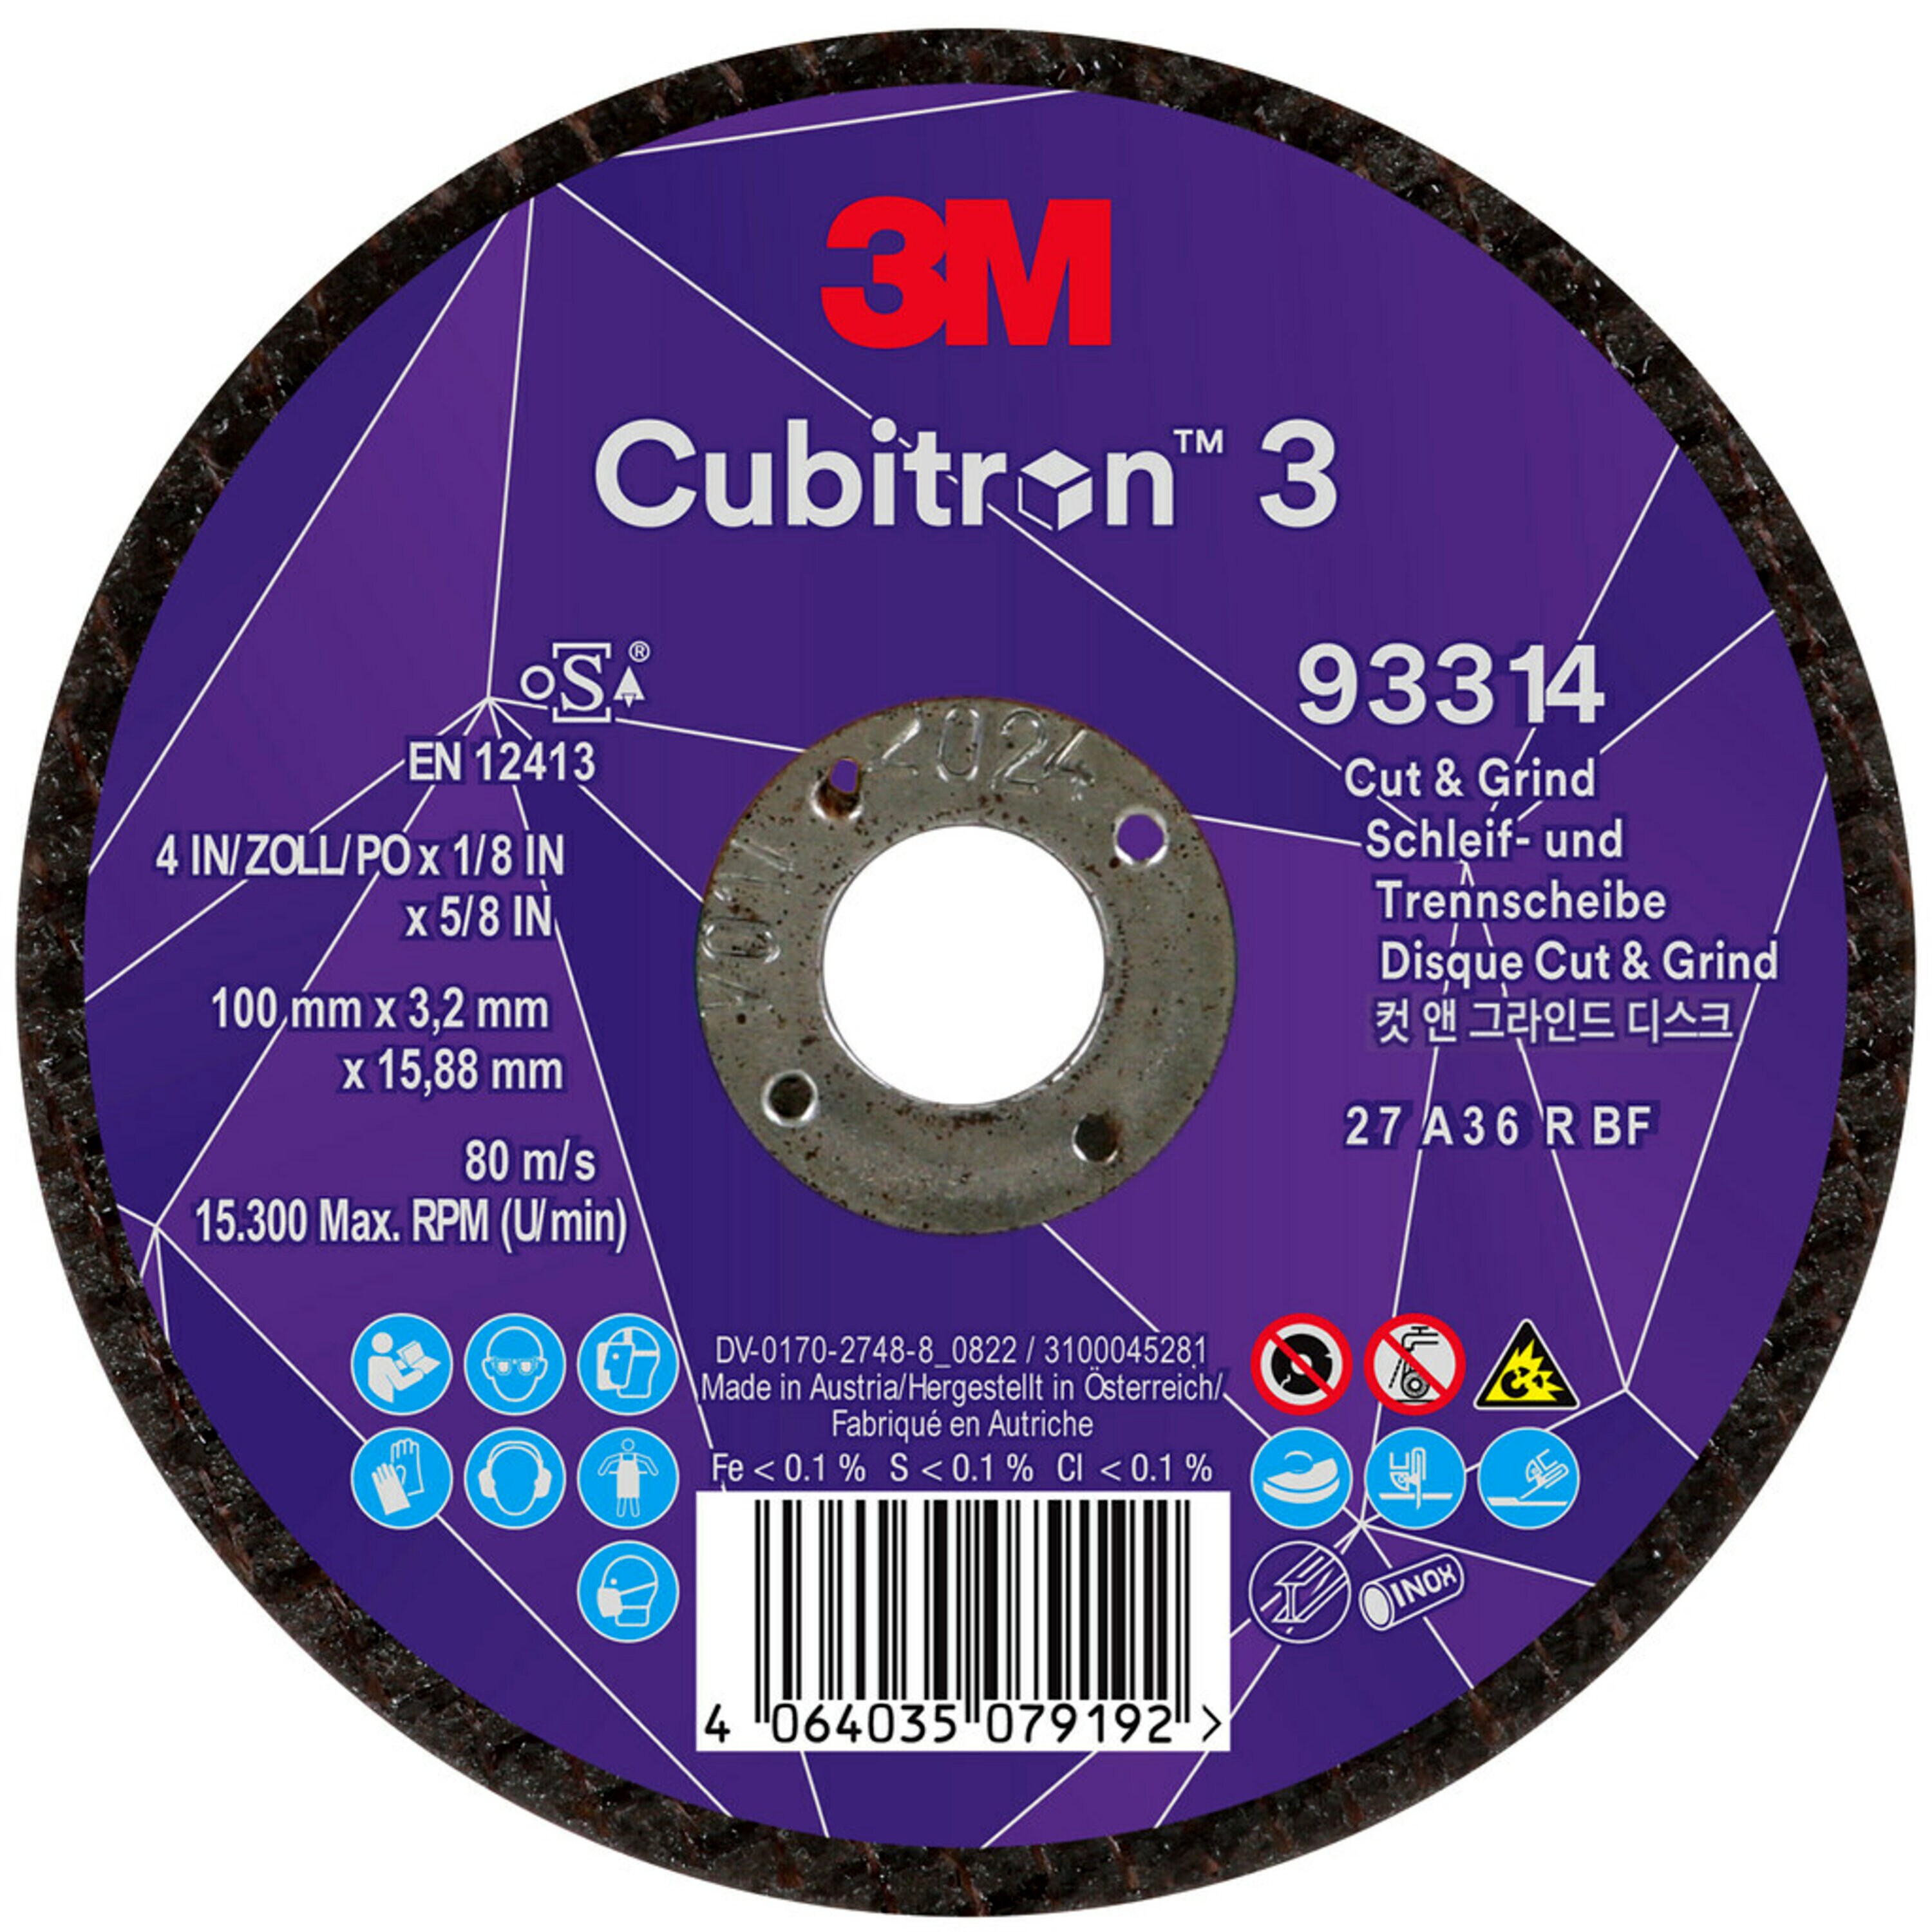 3M Cubitron 3 Cut & Grind Schruppscheibe, 100 mm, 3,2 mm, 15,88 mm, 36+, Typ 27 #93314